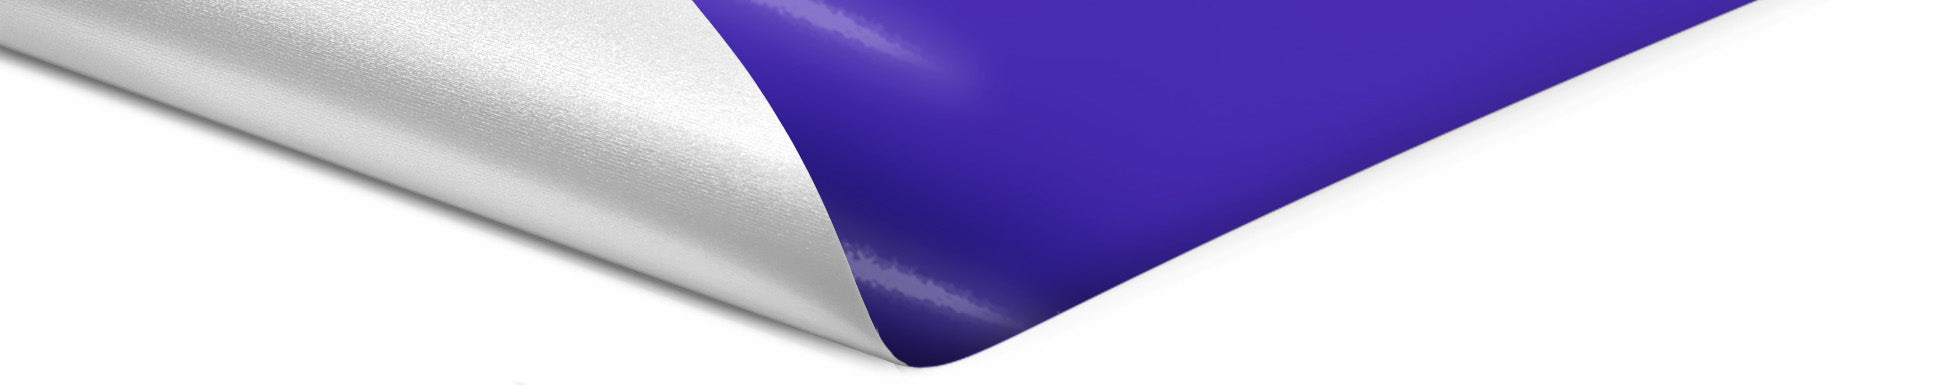 purple vinyl wrap